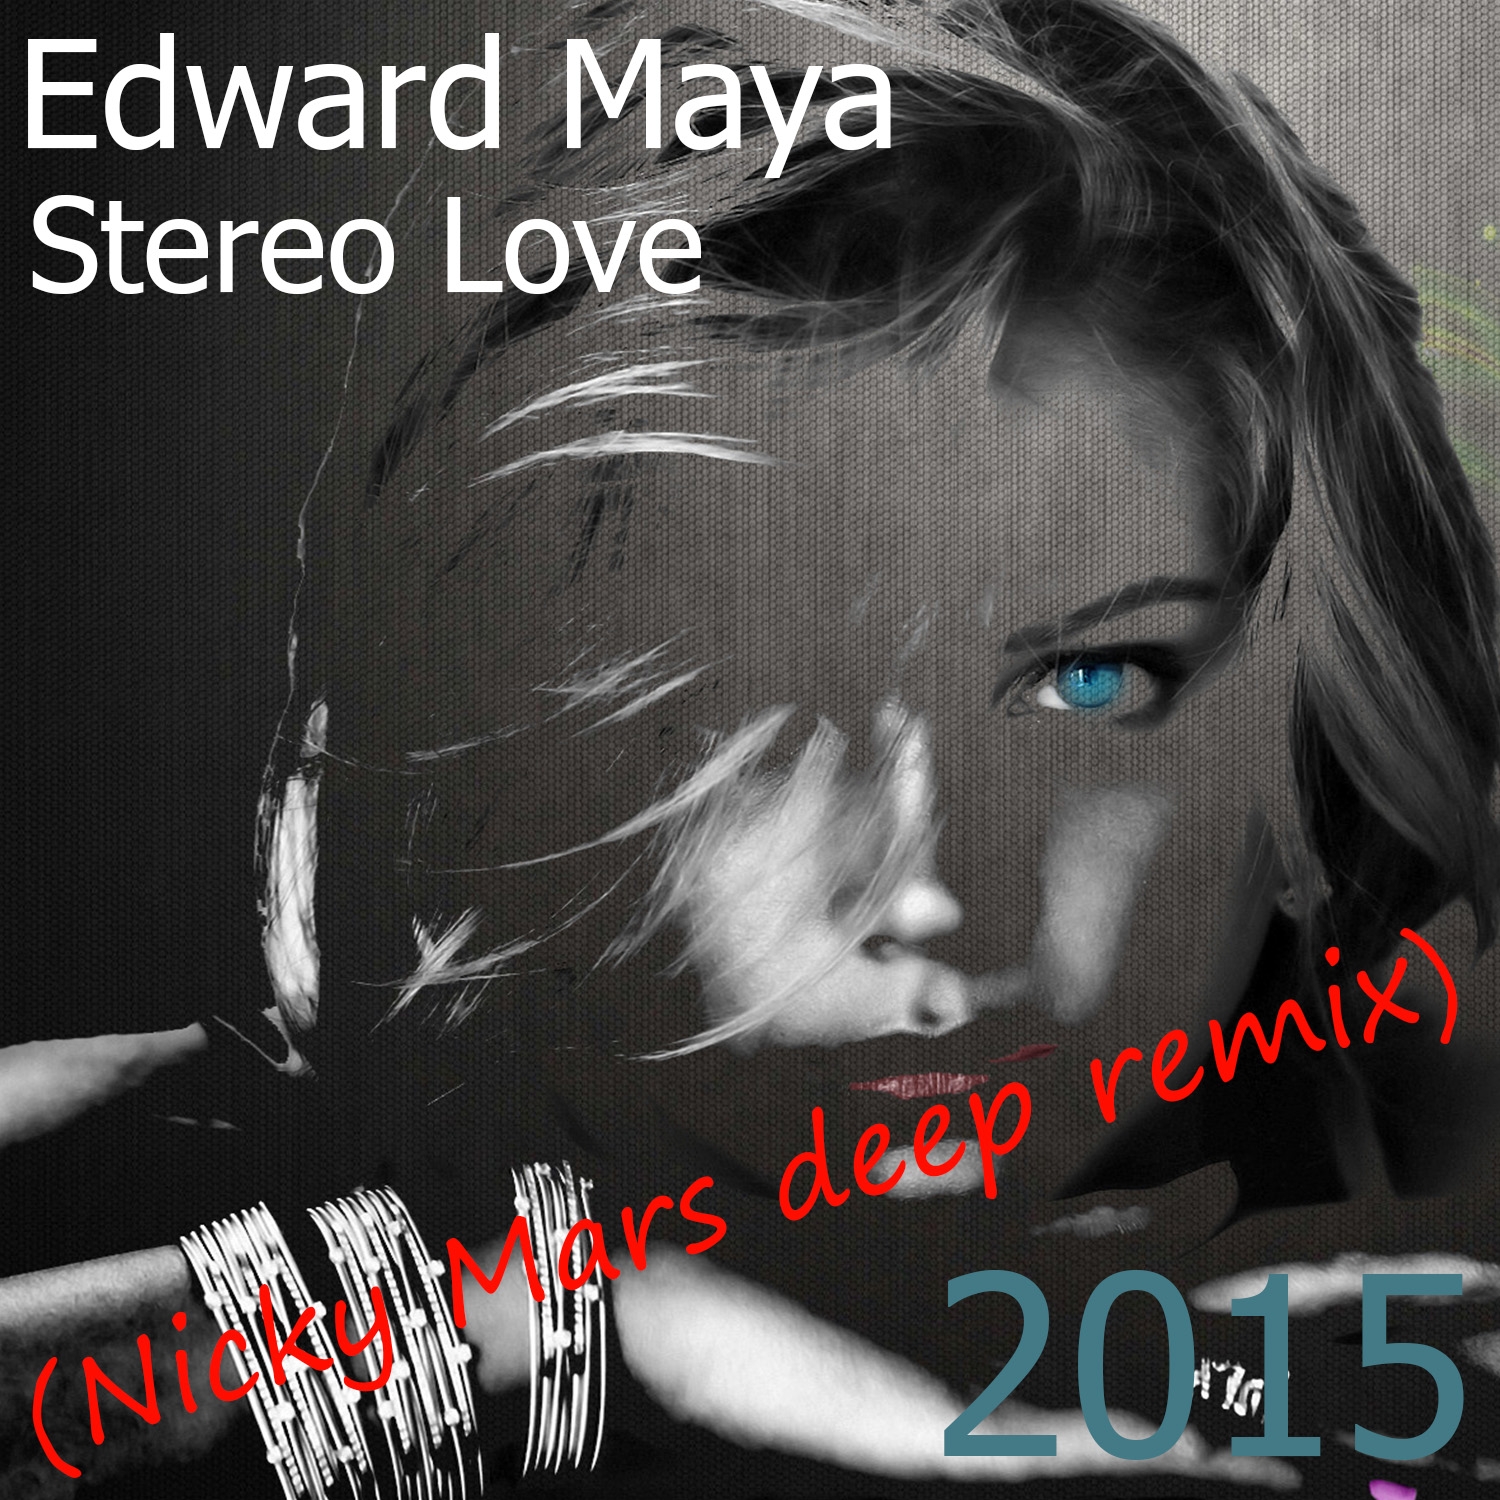 edward maya stereo love released